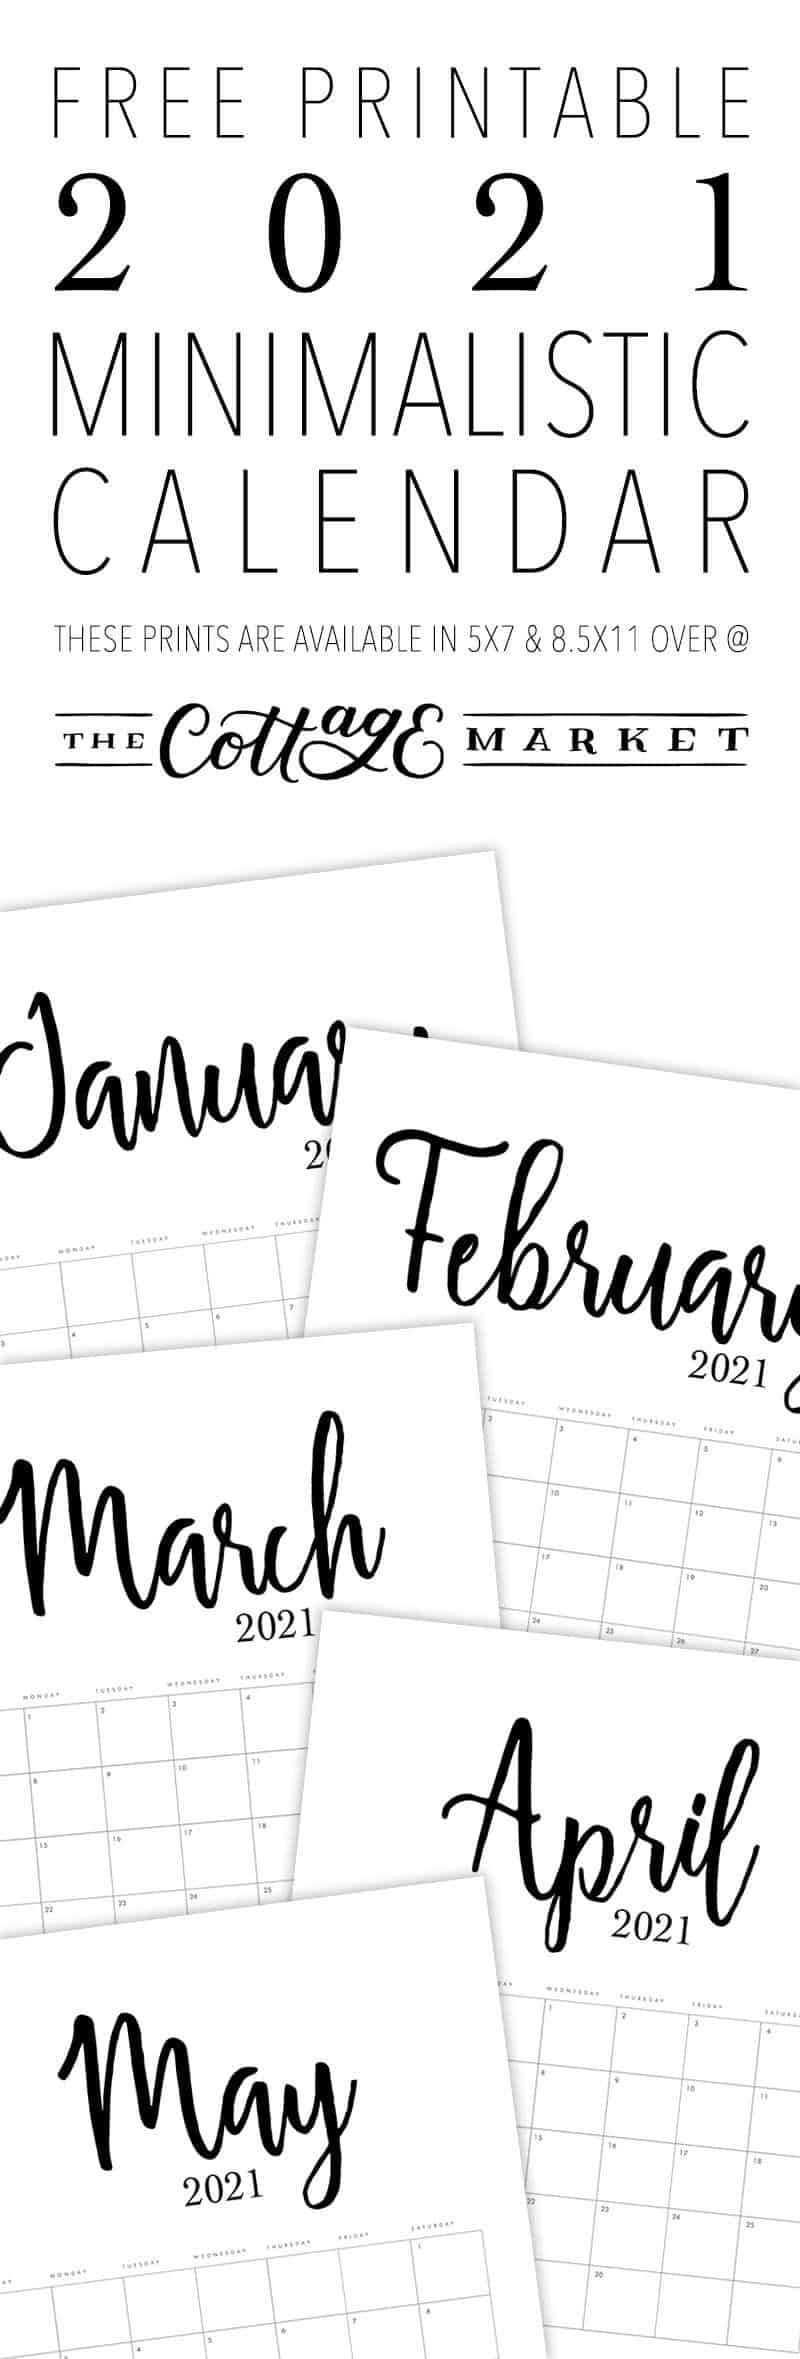 free 2021 minimalist calendar the cottage market